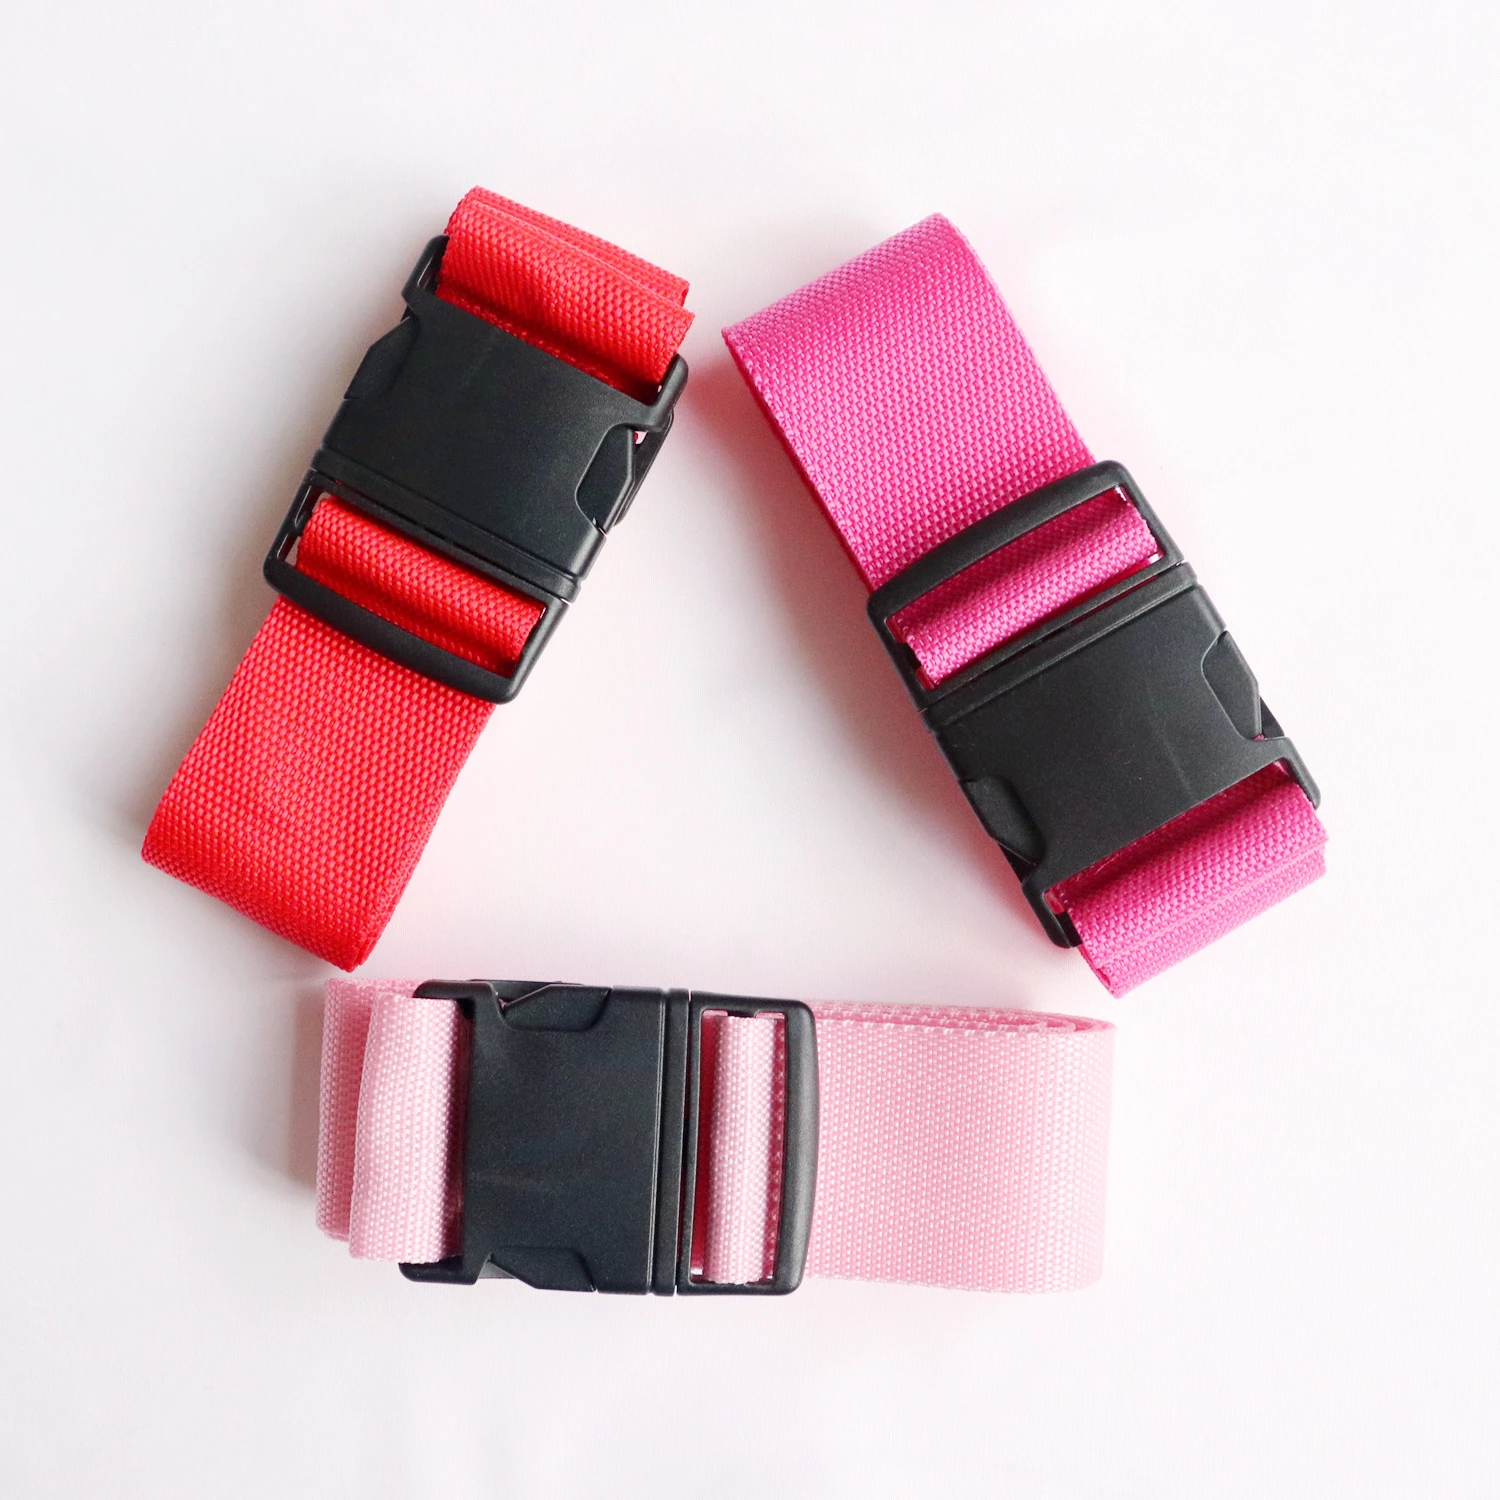 Travel luggage strap/polyester luggage belt with lock/travel luggage bag belt